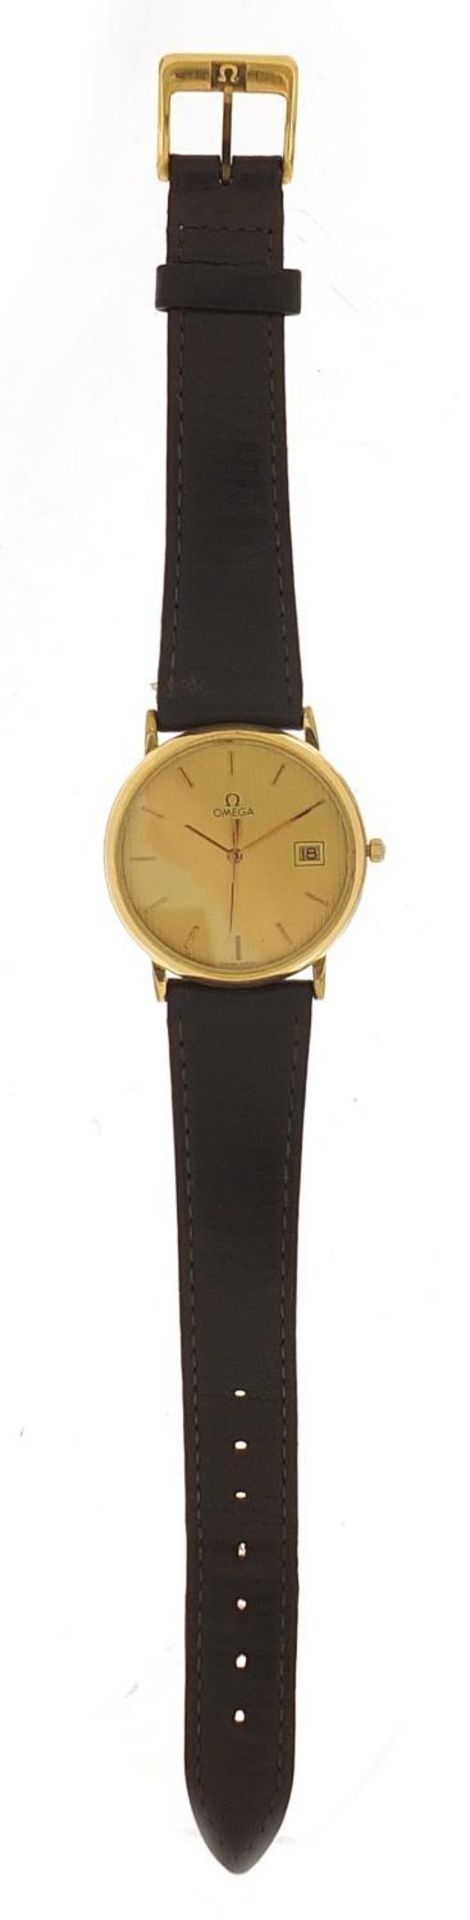 Omega Deville, gentlemen's quartz wristwatch with date aperture, 32.0mm in diameter : - Image 2 of 7